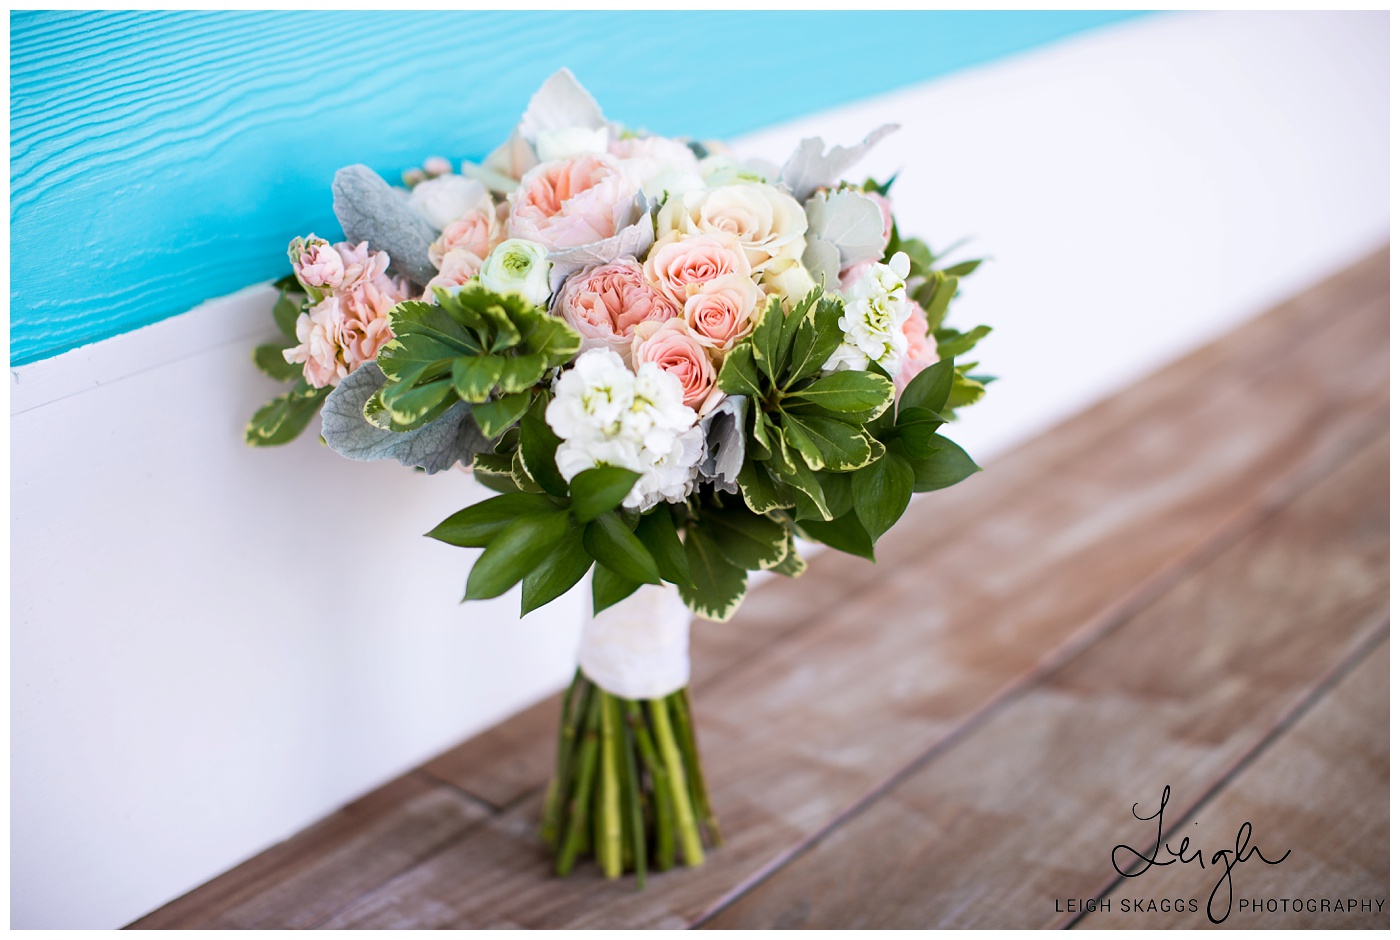 Ask the Experts, Palette of Petals, Floral Designer, Hampton Roads, Virginia.